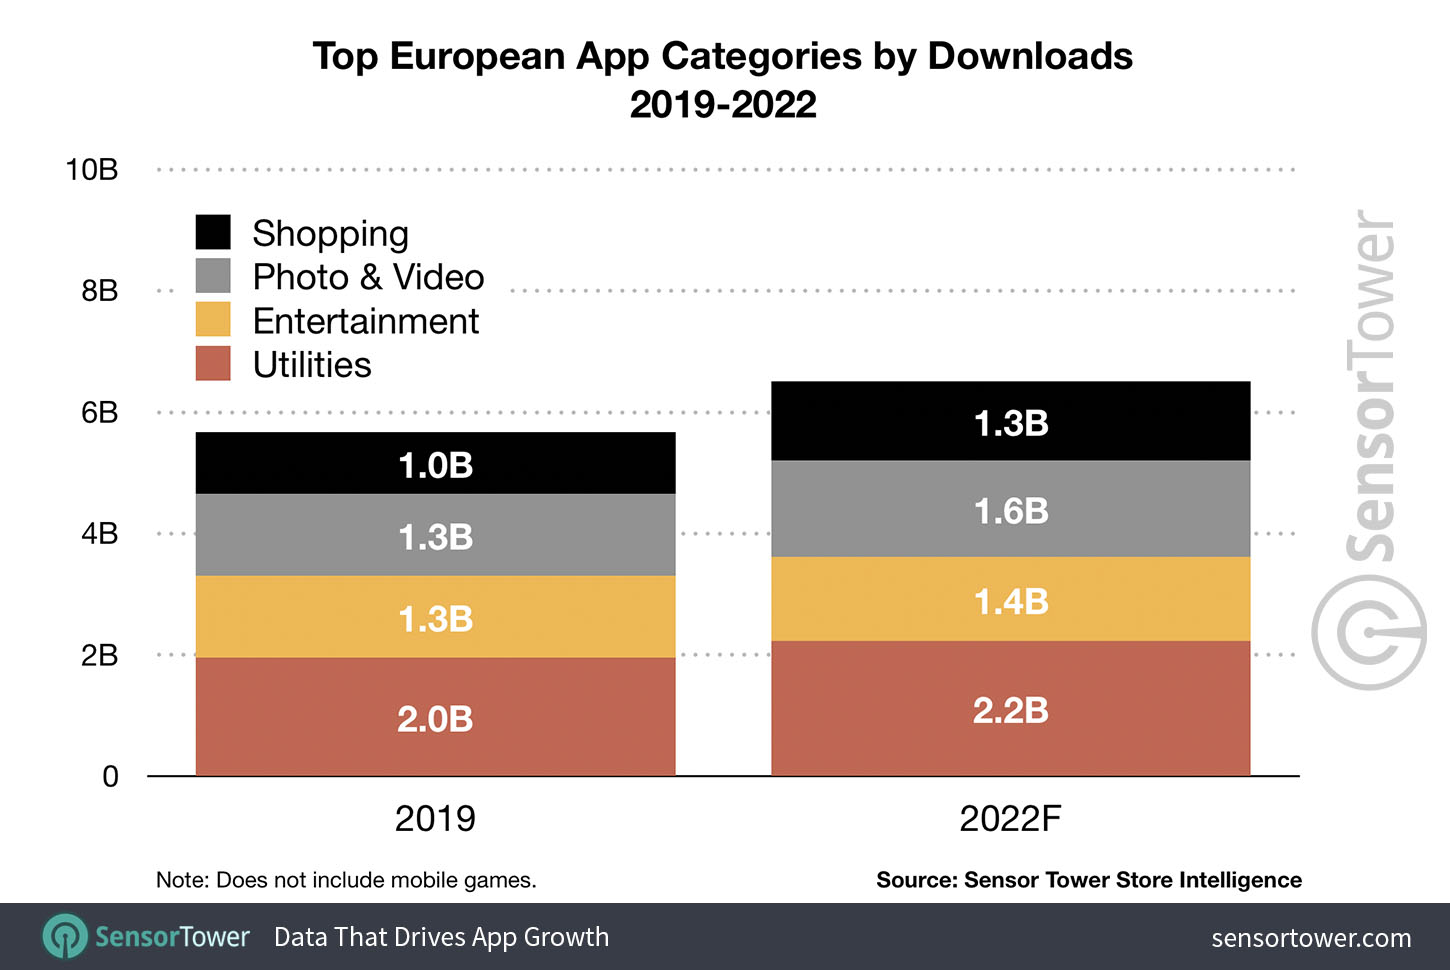 Top European mobile app categories by downloads 2019-2022